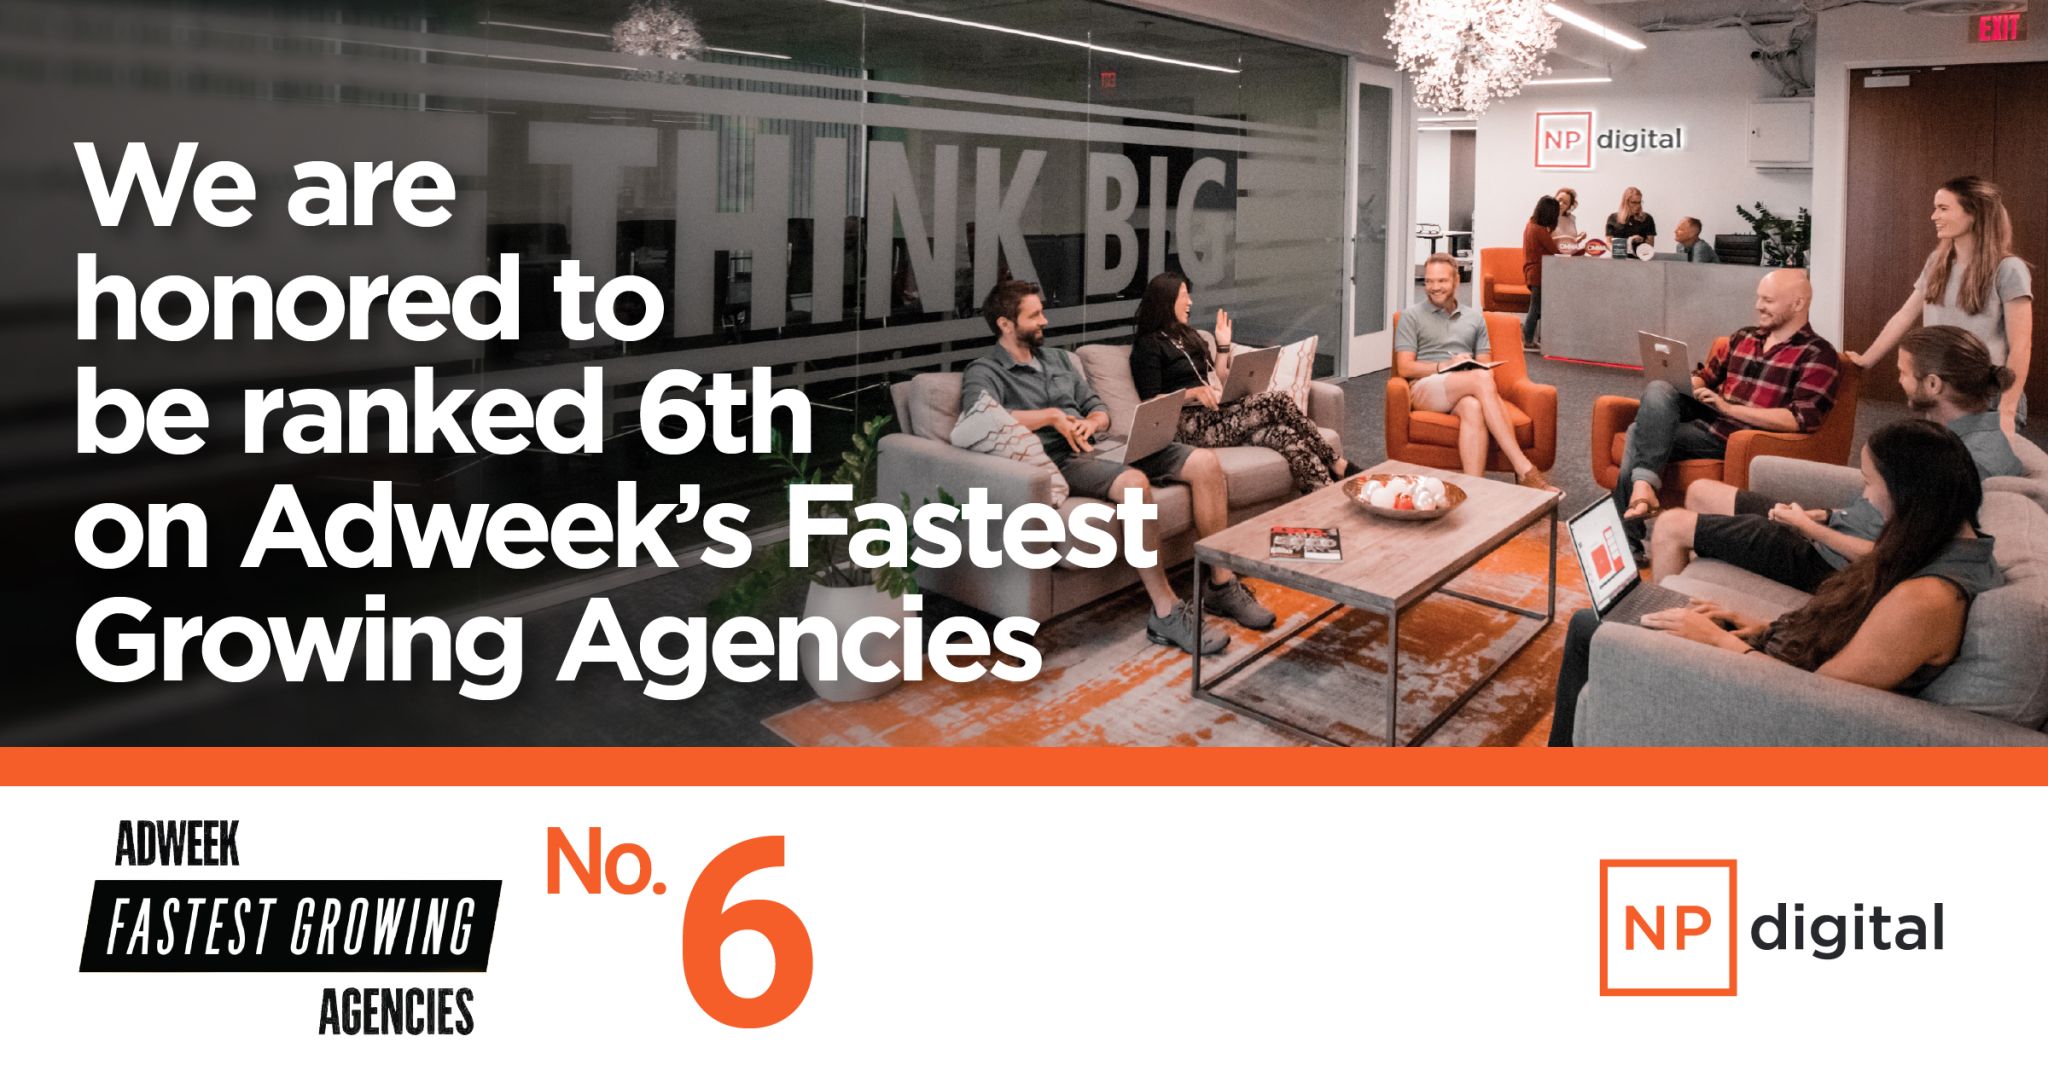 Adweek Names NP Digital as the 6th Fastest Growing Agency